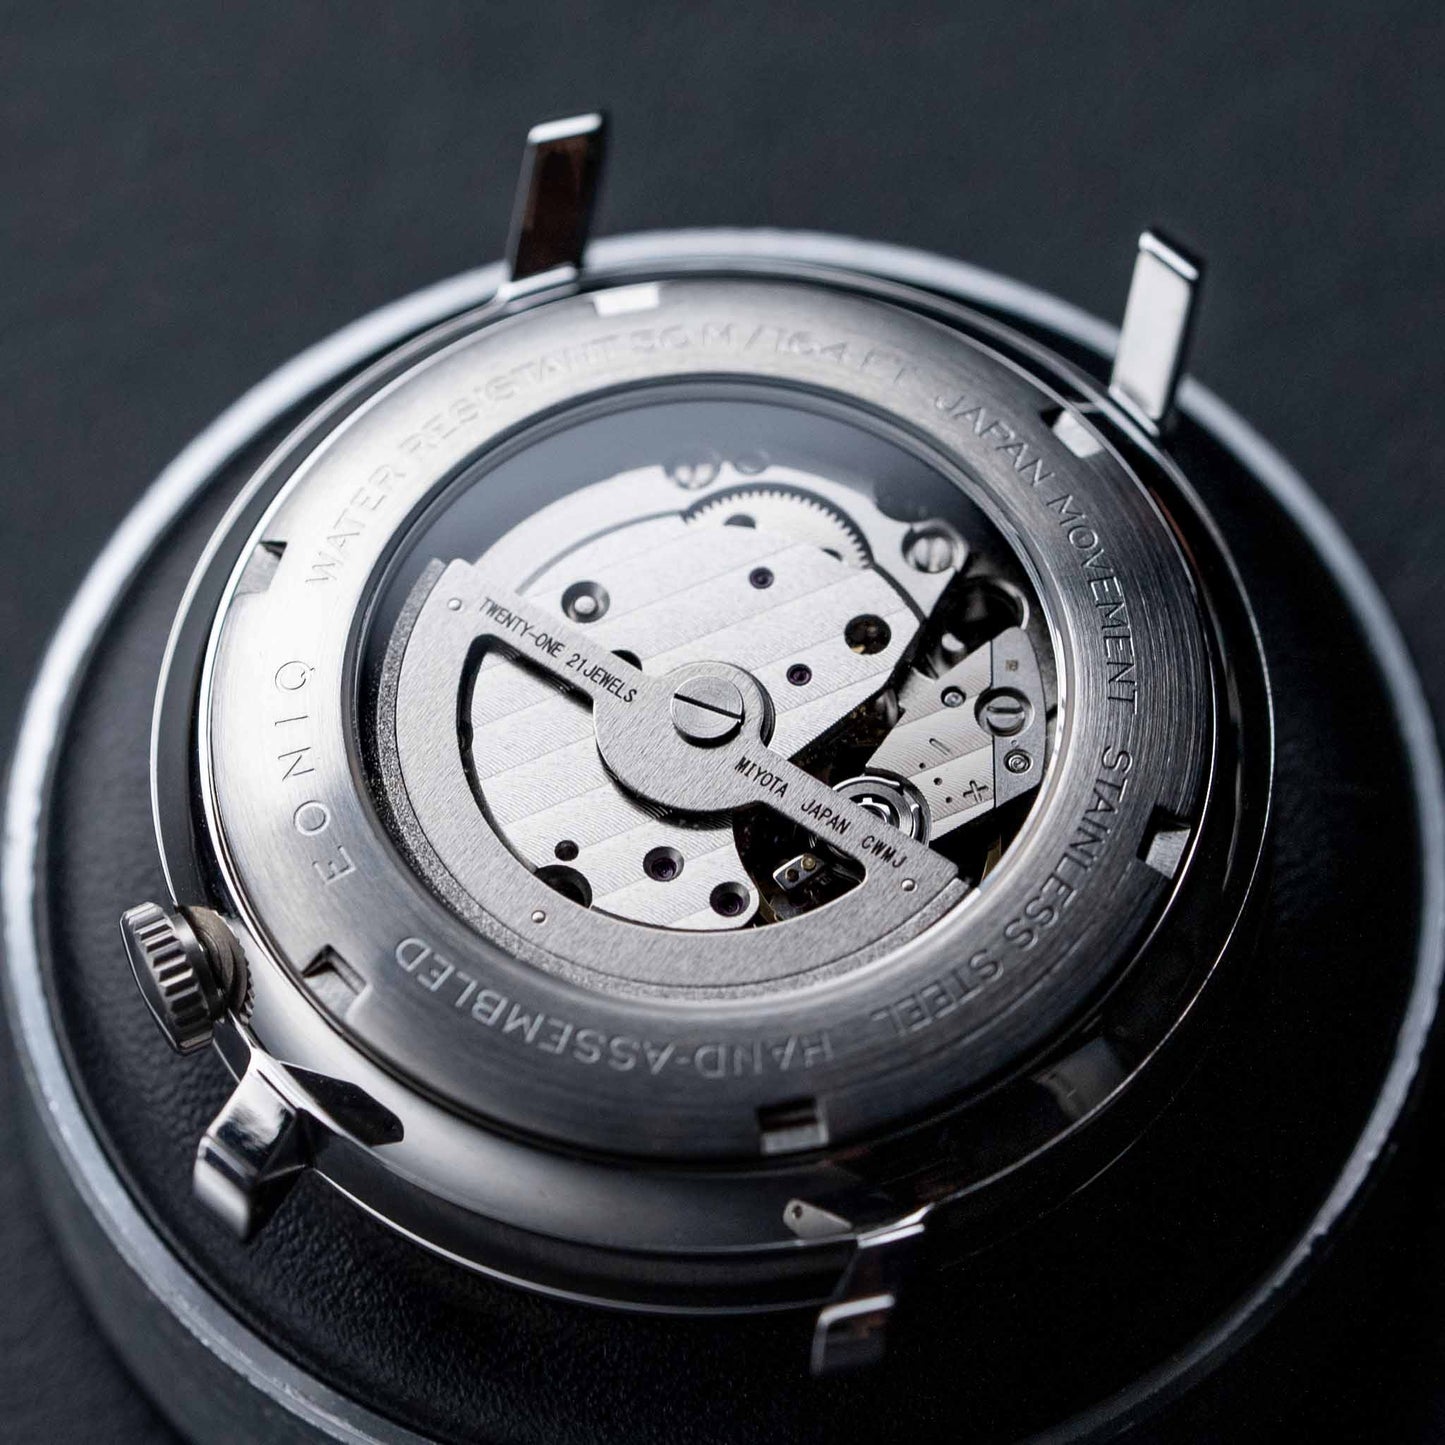 EONIQ custom watch - ALSTER series with case back. miyota 8 movement